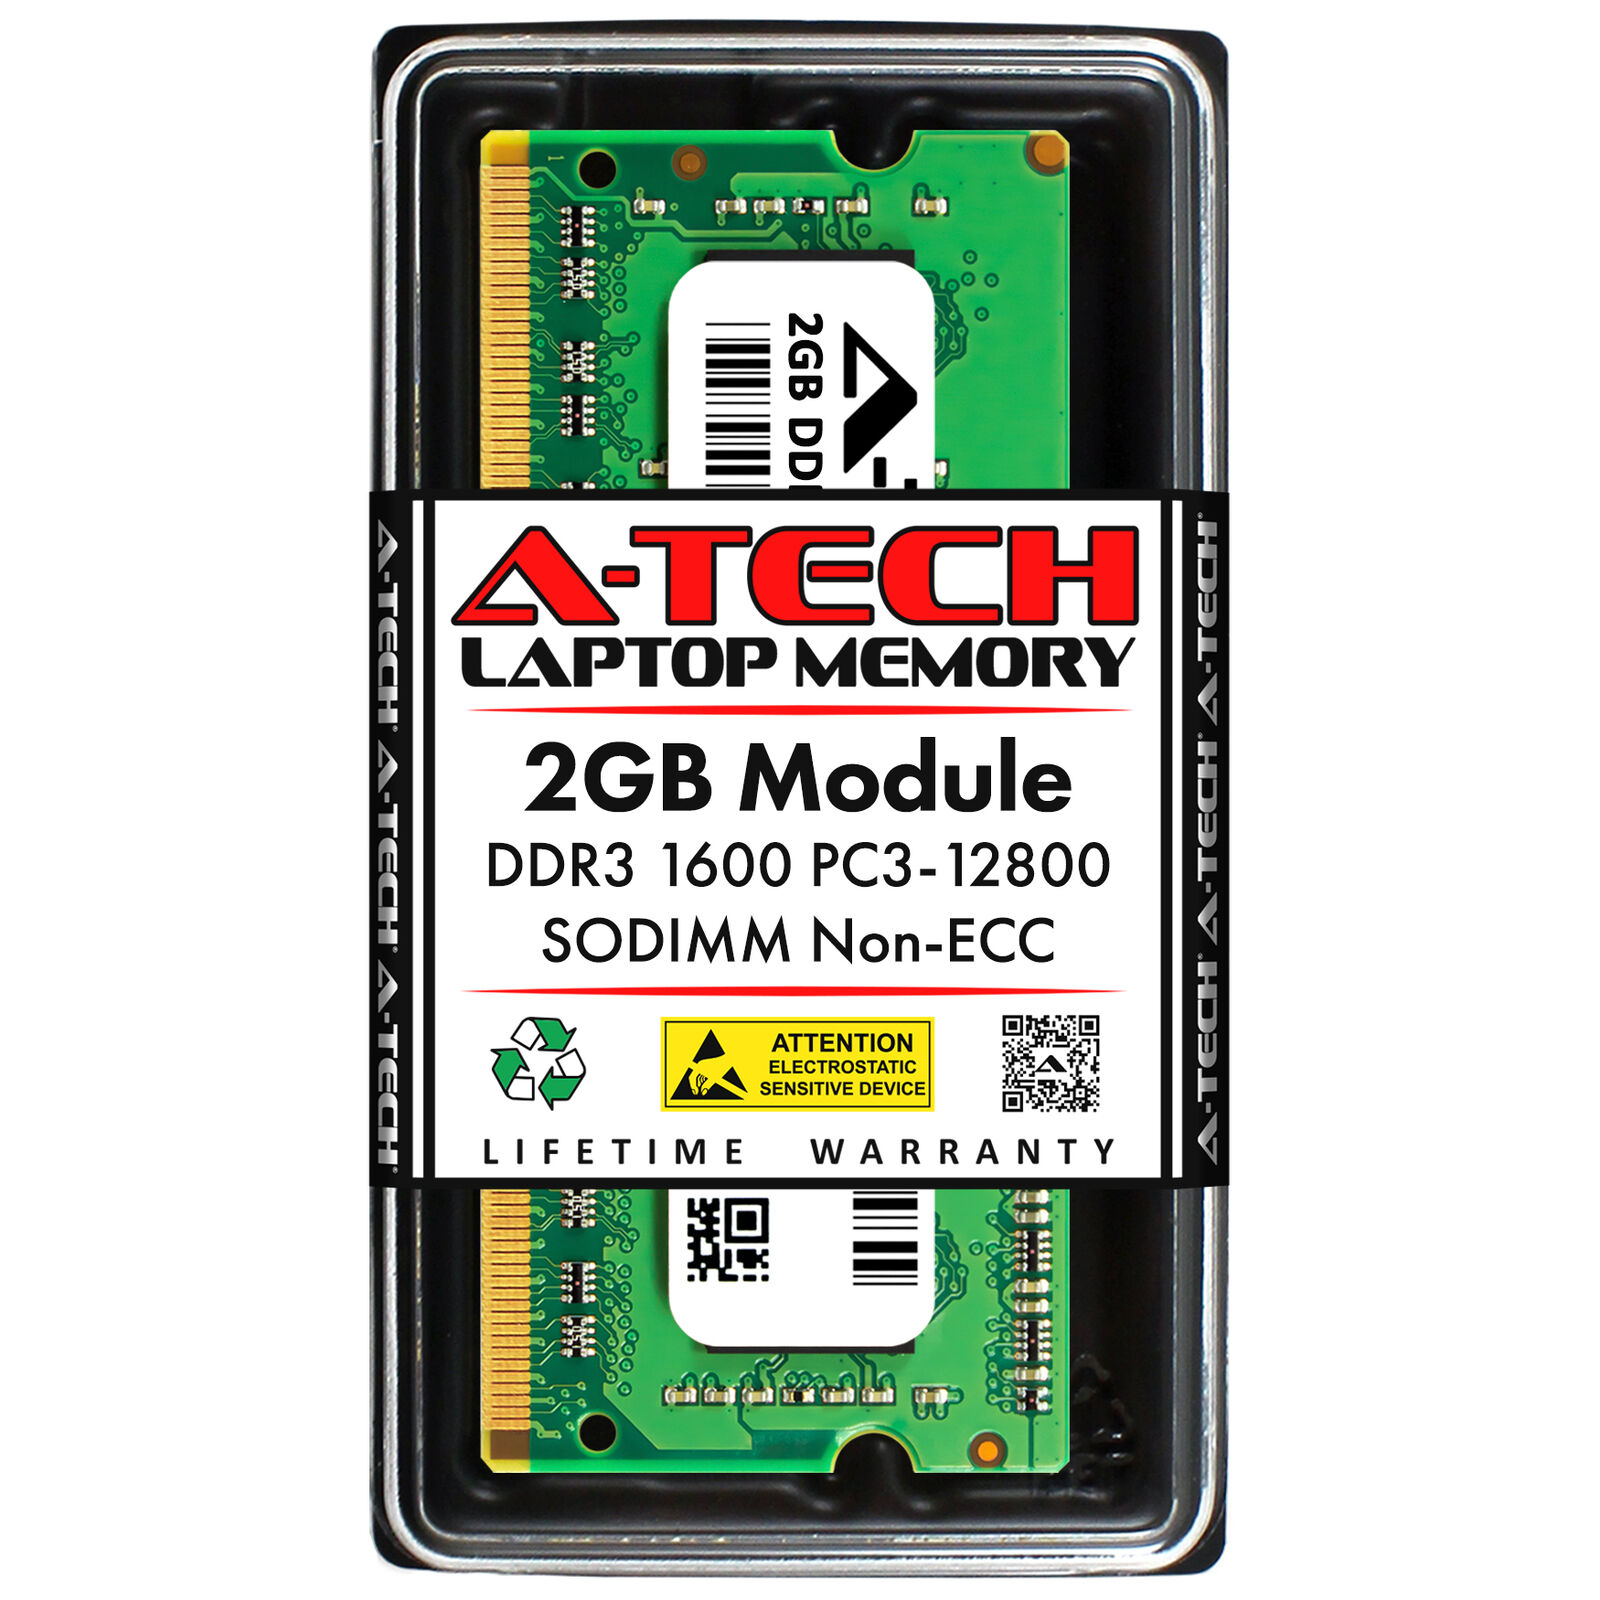 2GB STICK SODIMM DDR3 NON-ECC PC3-12800 1600MHz 1600 MHz DDR-3 2G 2 g Ram Memory